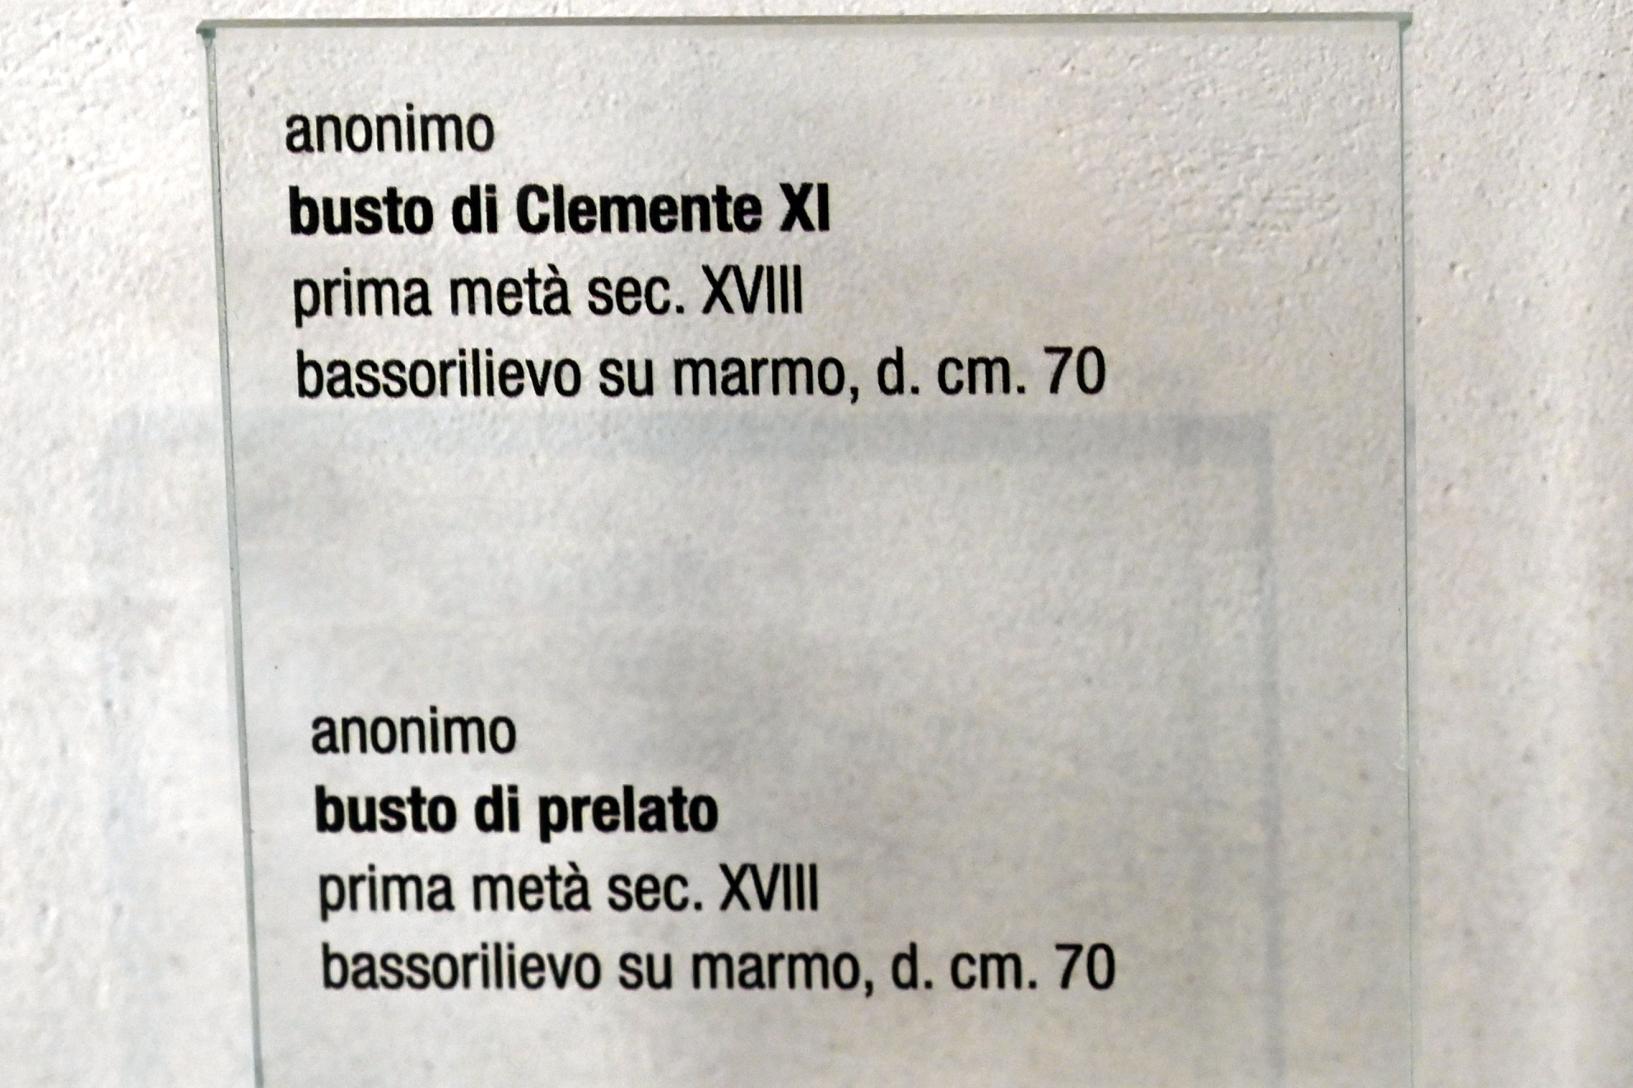 Büste des Papstes Clemens XI, Urbino, Diözesanmuseum Albani, Saal 2, 1. Hälfte 18. Jhd., Bild 2/2